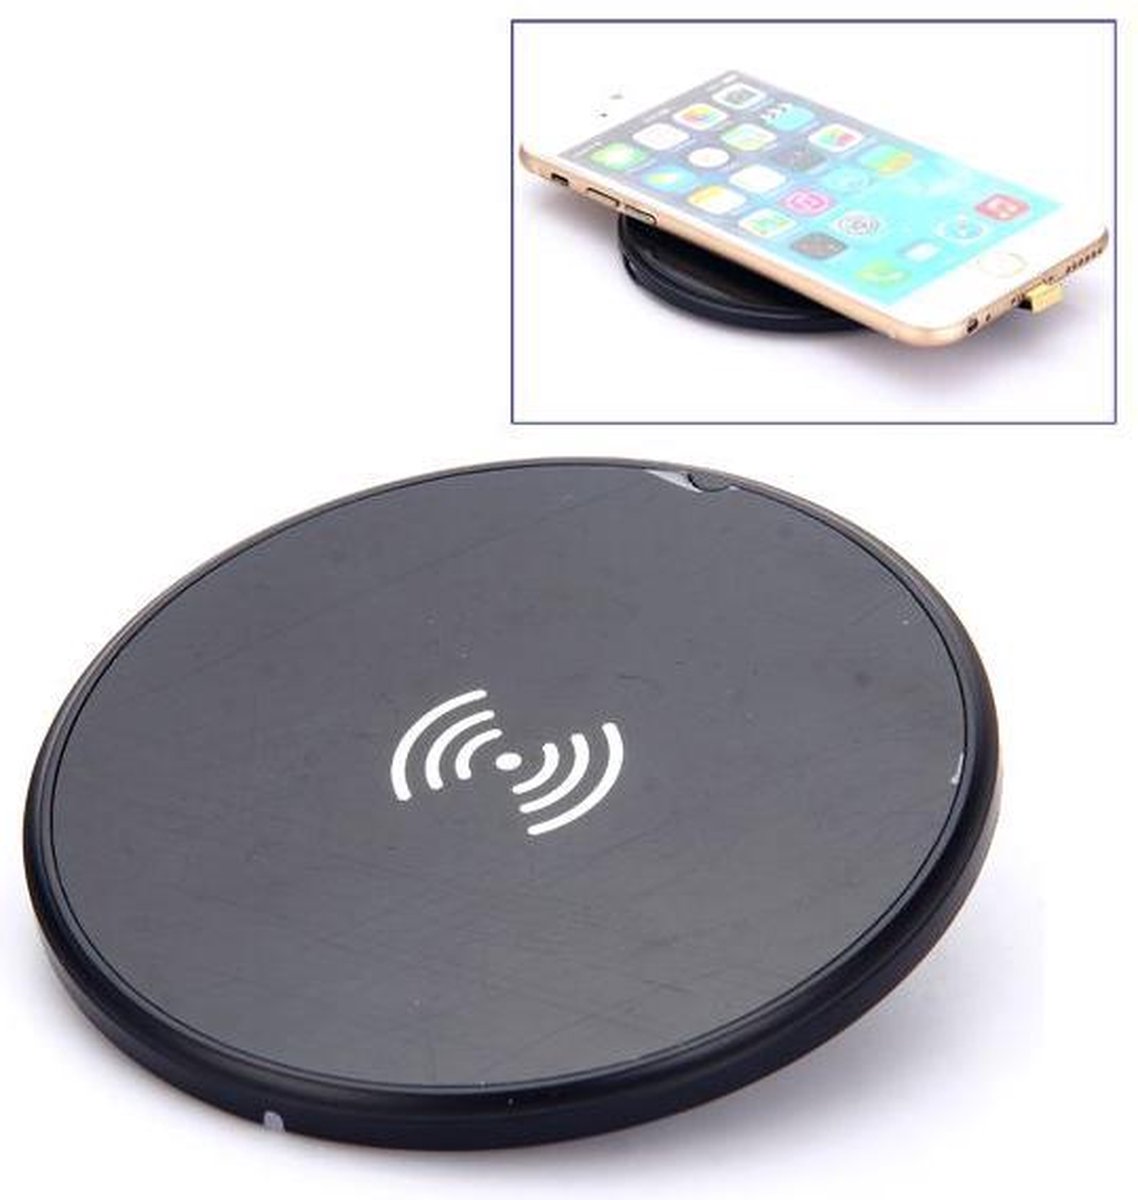 Voetzool Markeer Concurreren Qi Wireless Charging Plate - Zwart - Huawei P8 Lite | bol.com